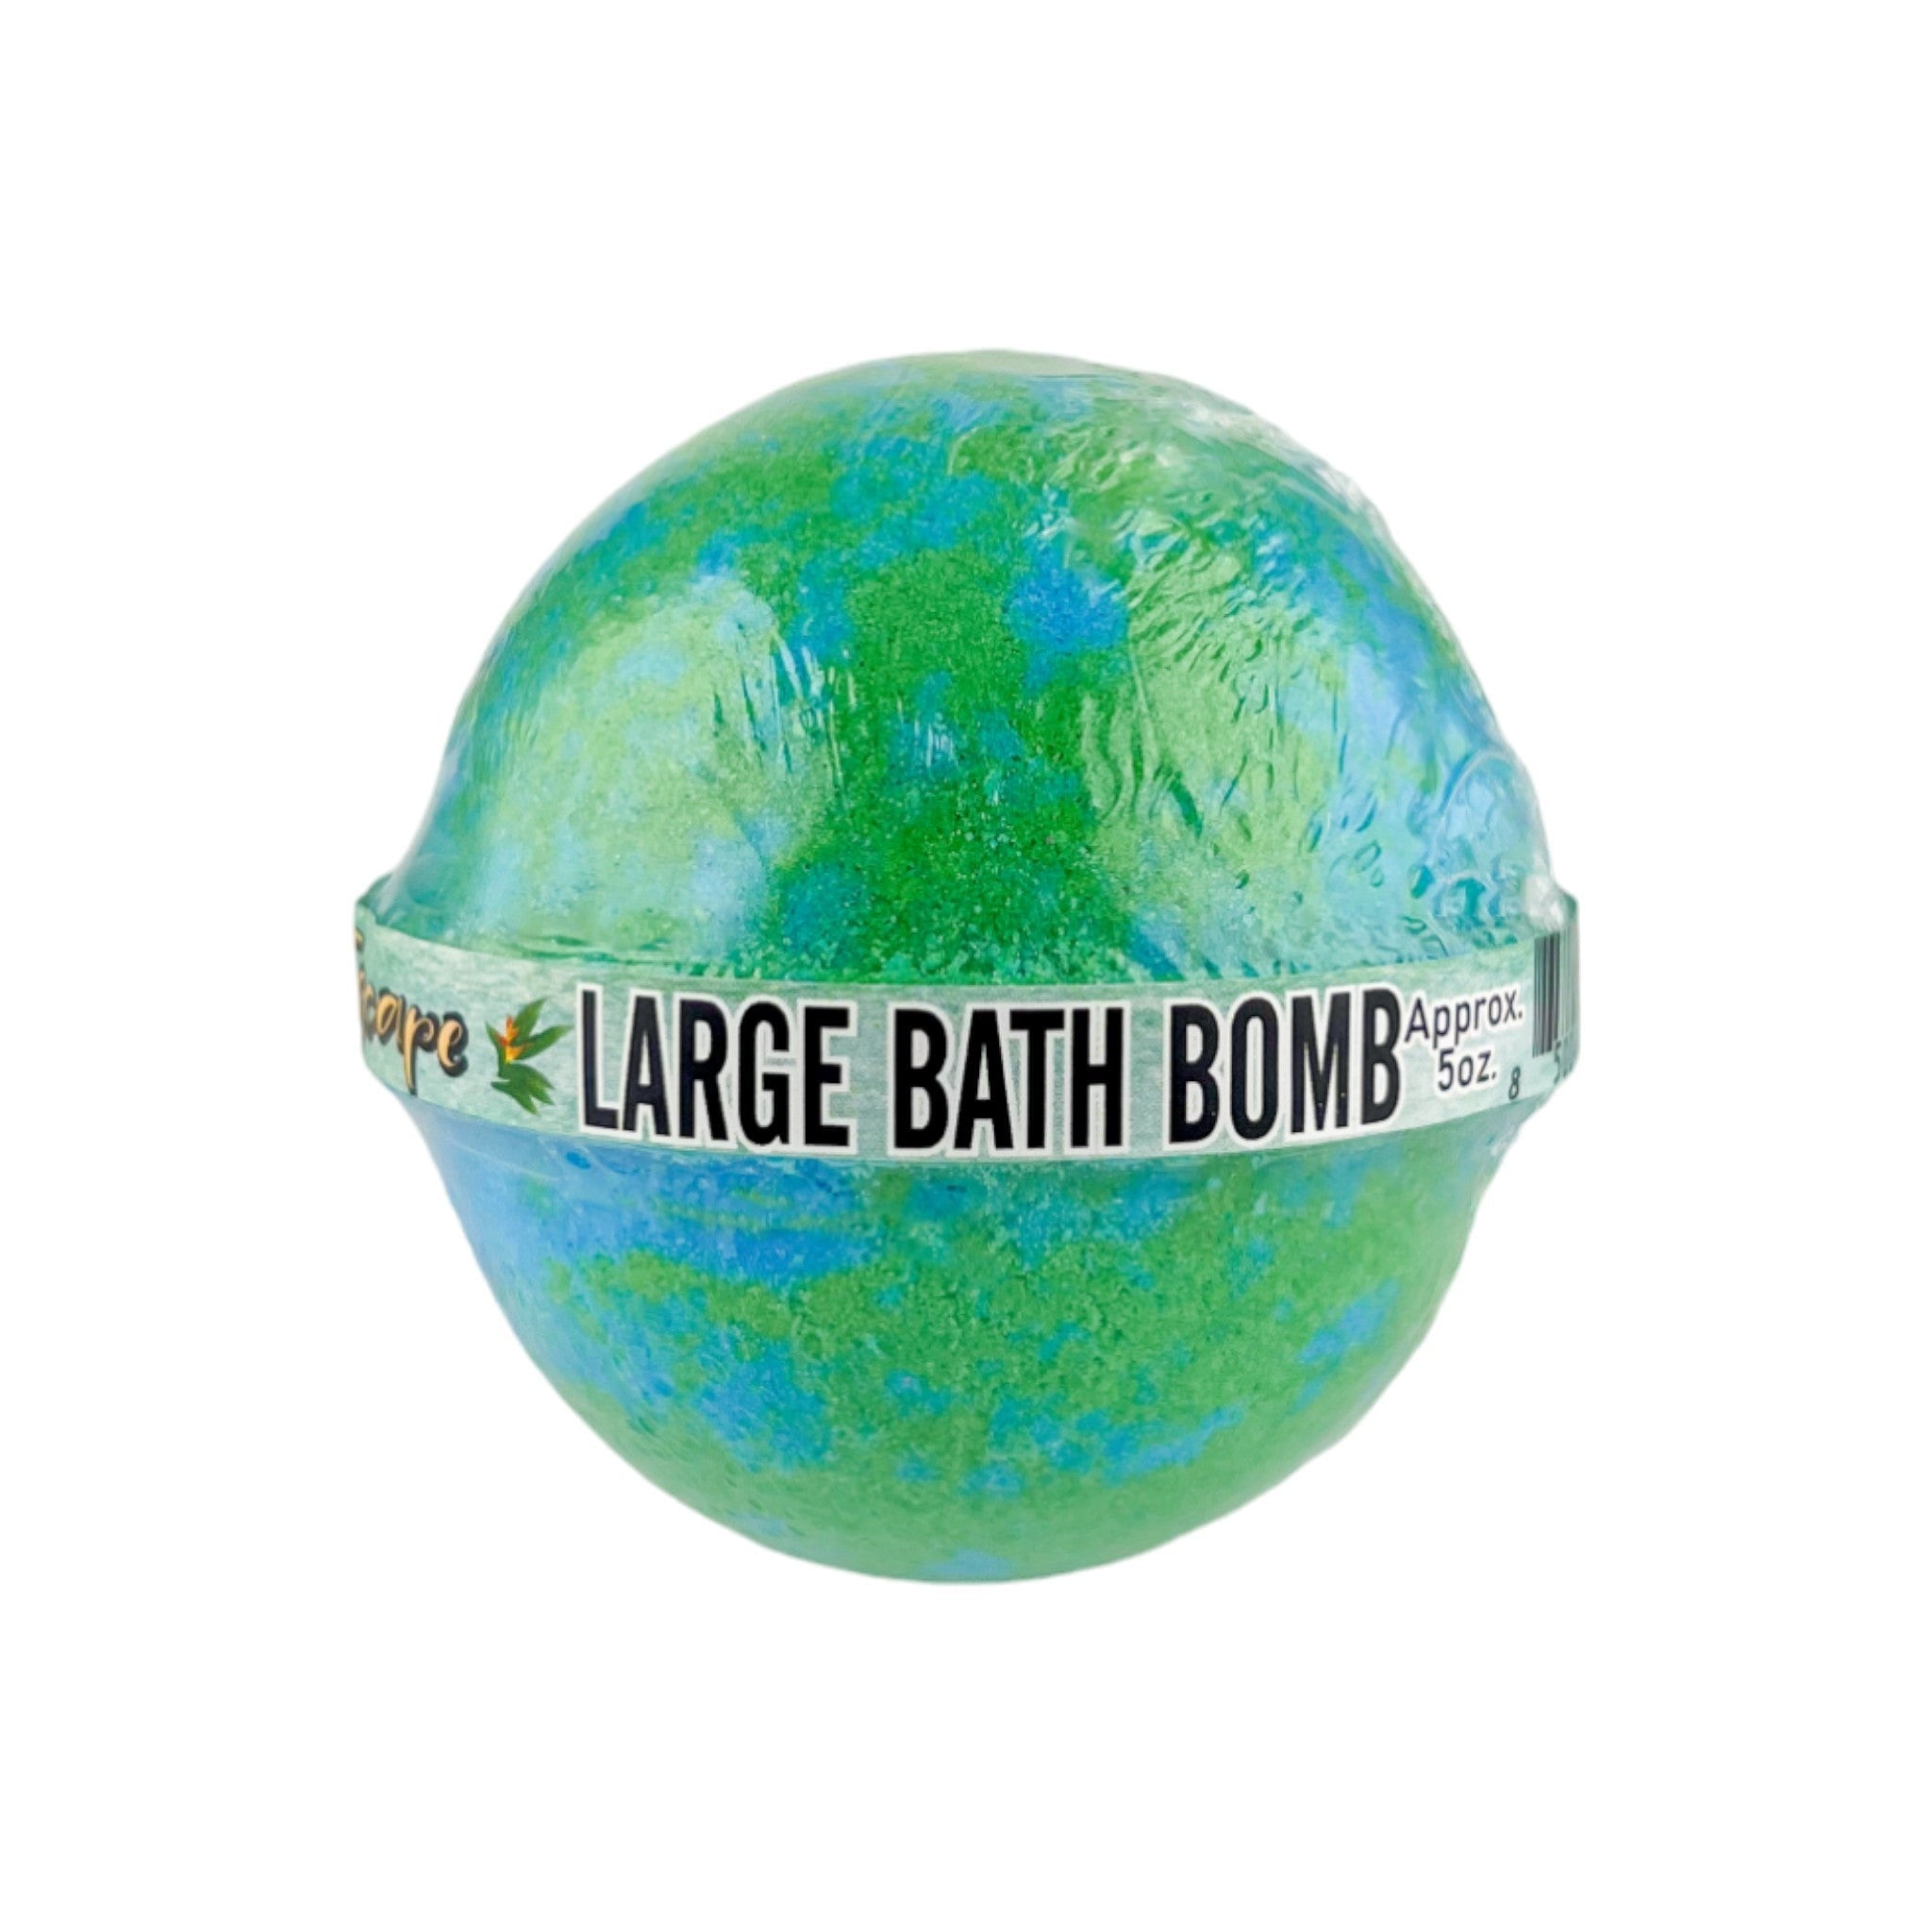 Seaside Escape Bath Bomb -Large - Old Town Soap Co.